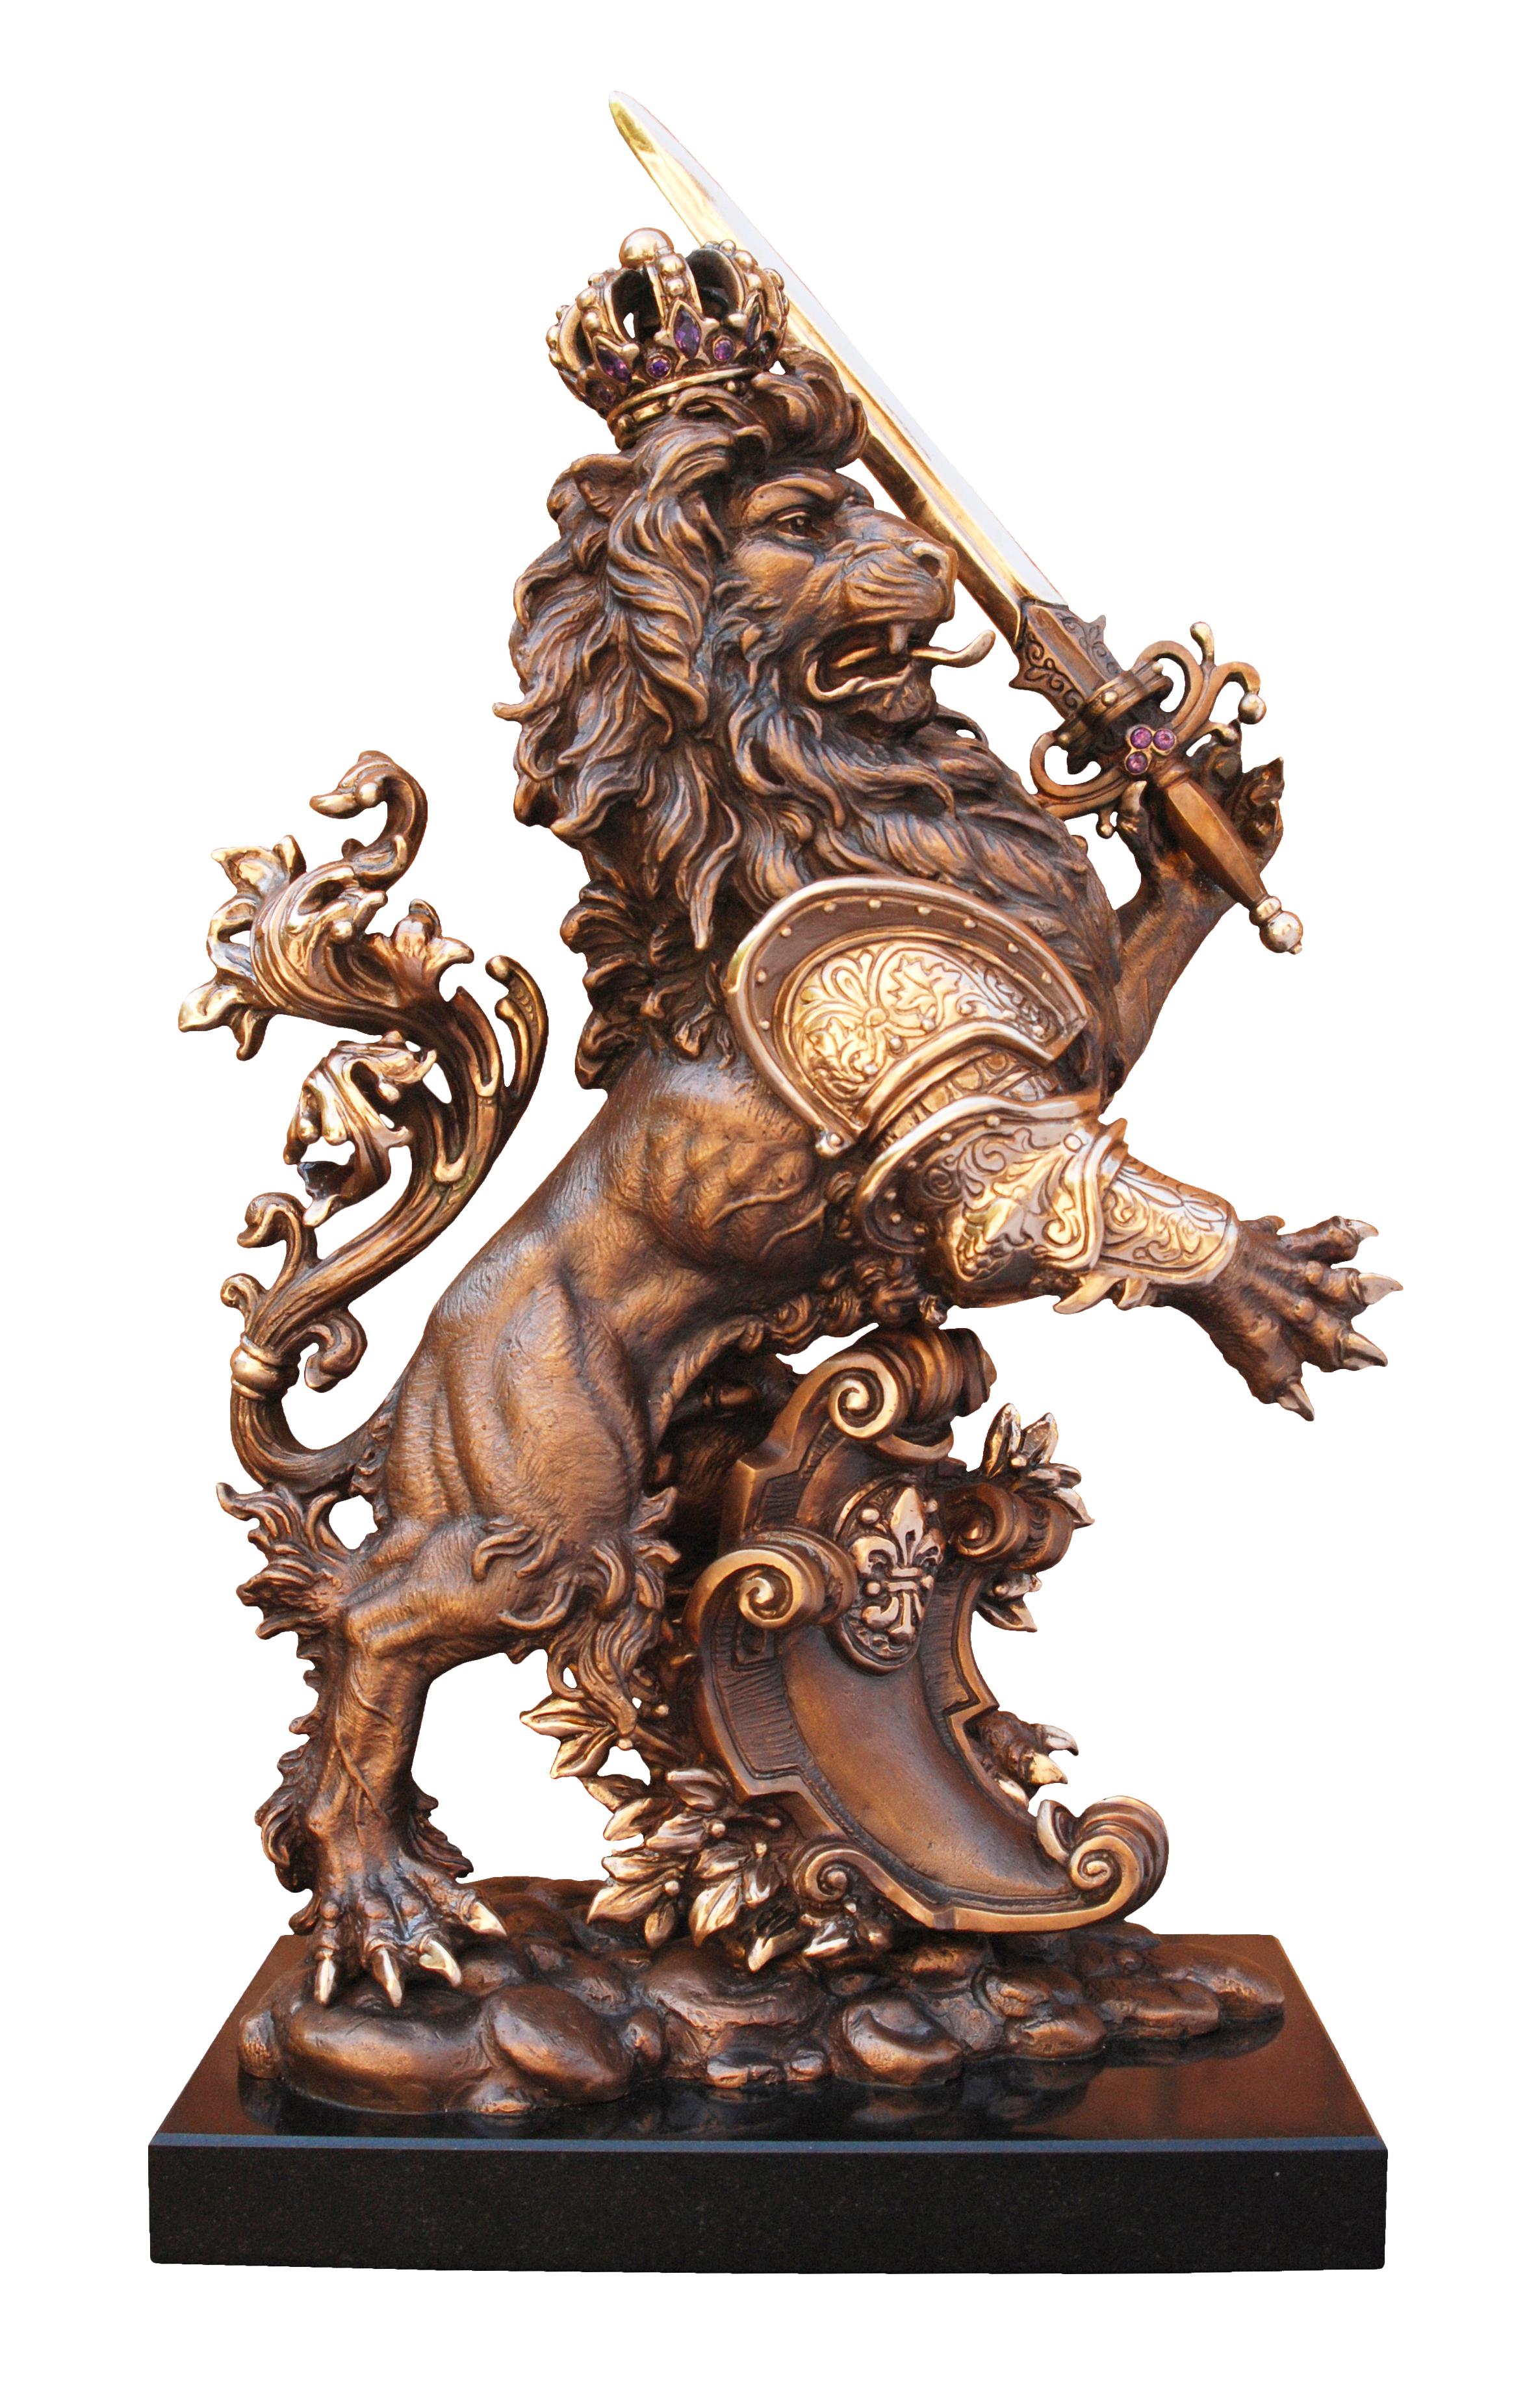 The Lion King - Sculpture by Petro Ozyumenko